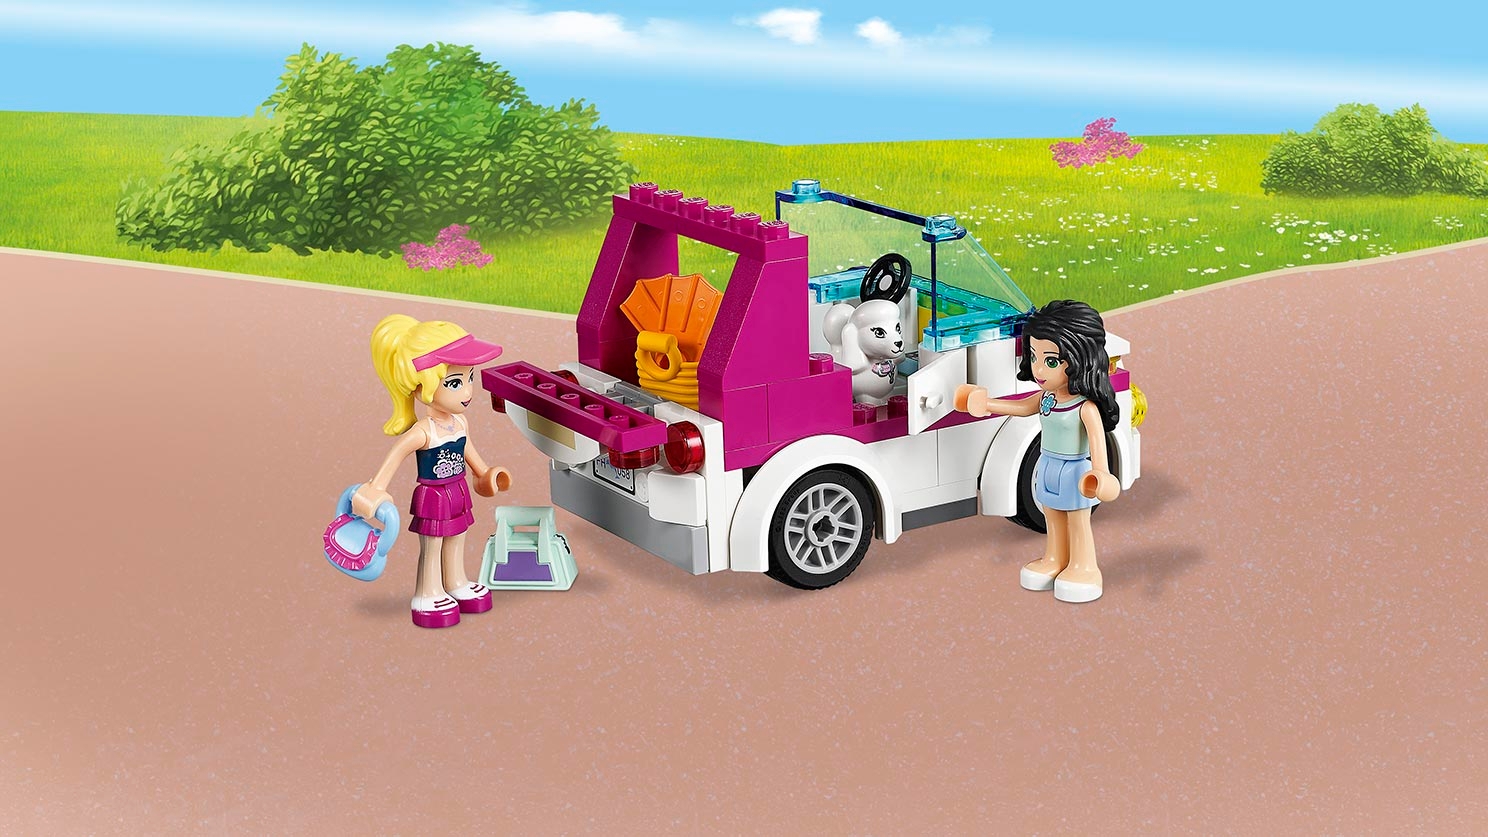 LEGO Friends 41058 - Heartlake Shopping Mall